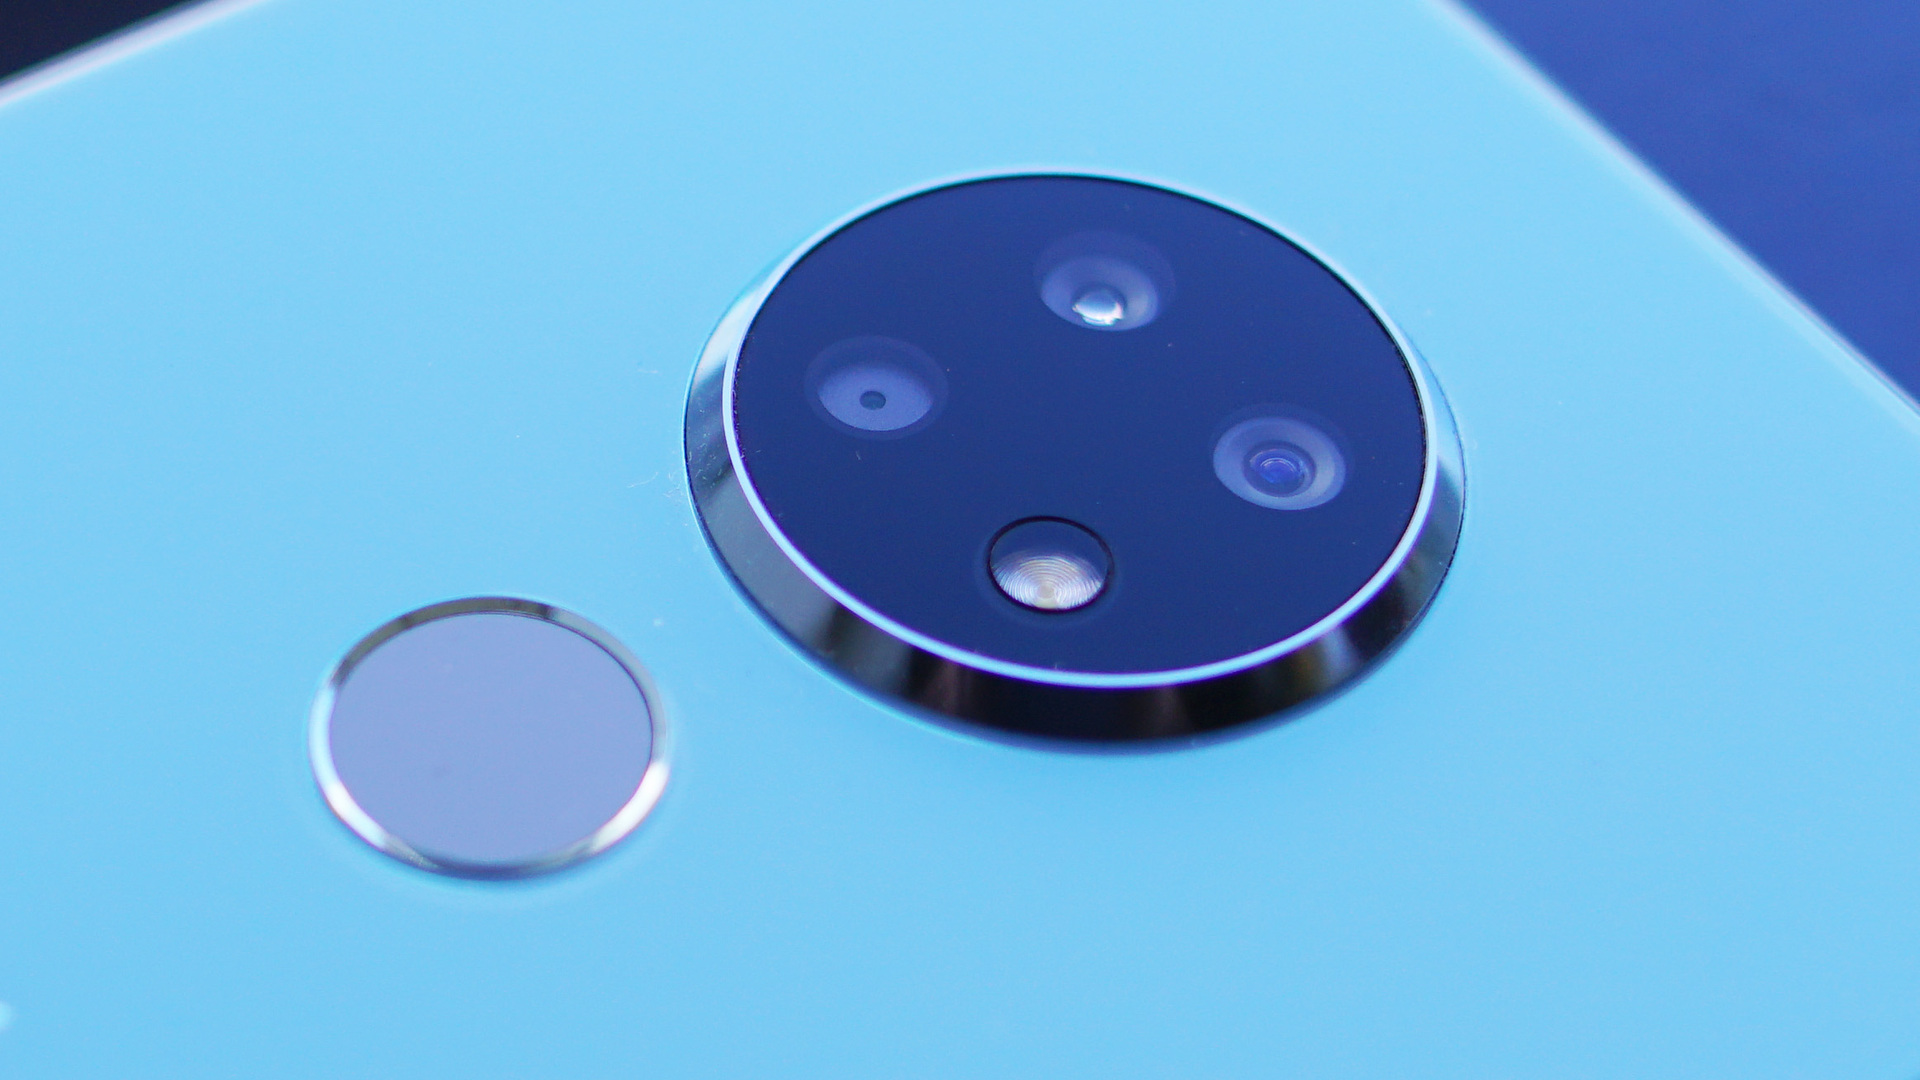 Nokia 6.2 camera fingerprint scanner closeup